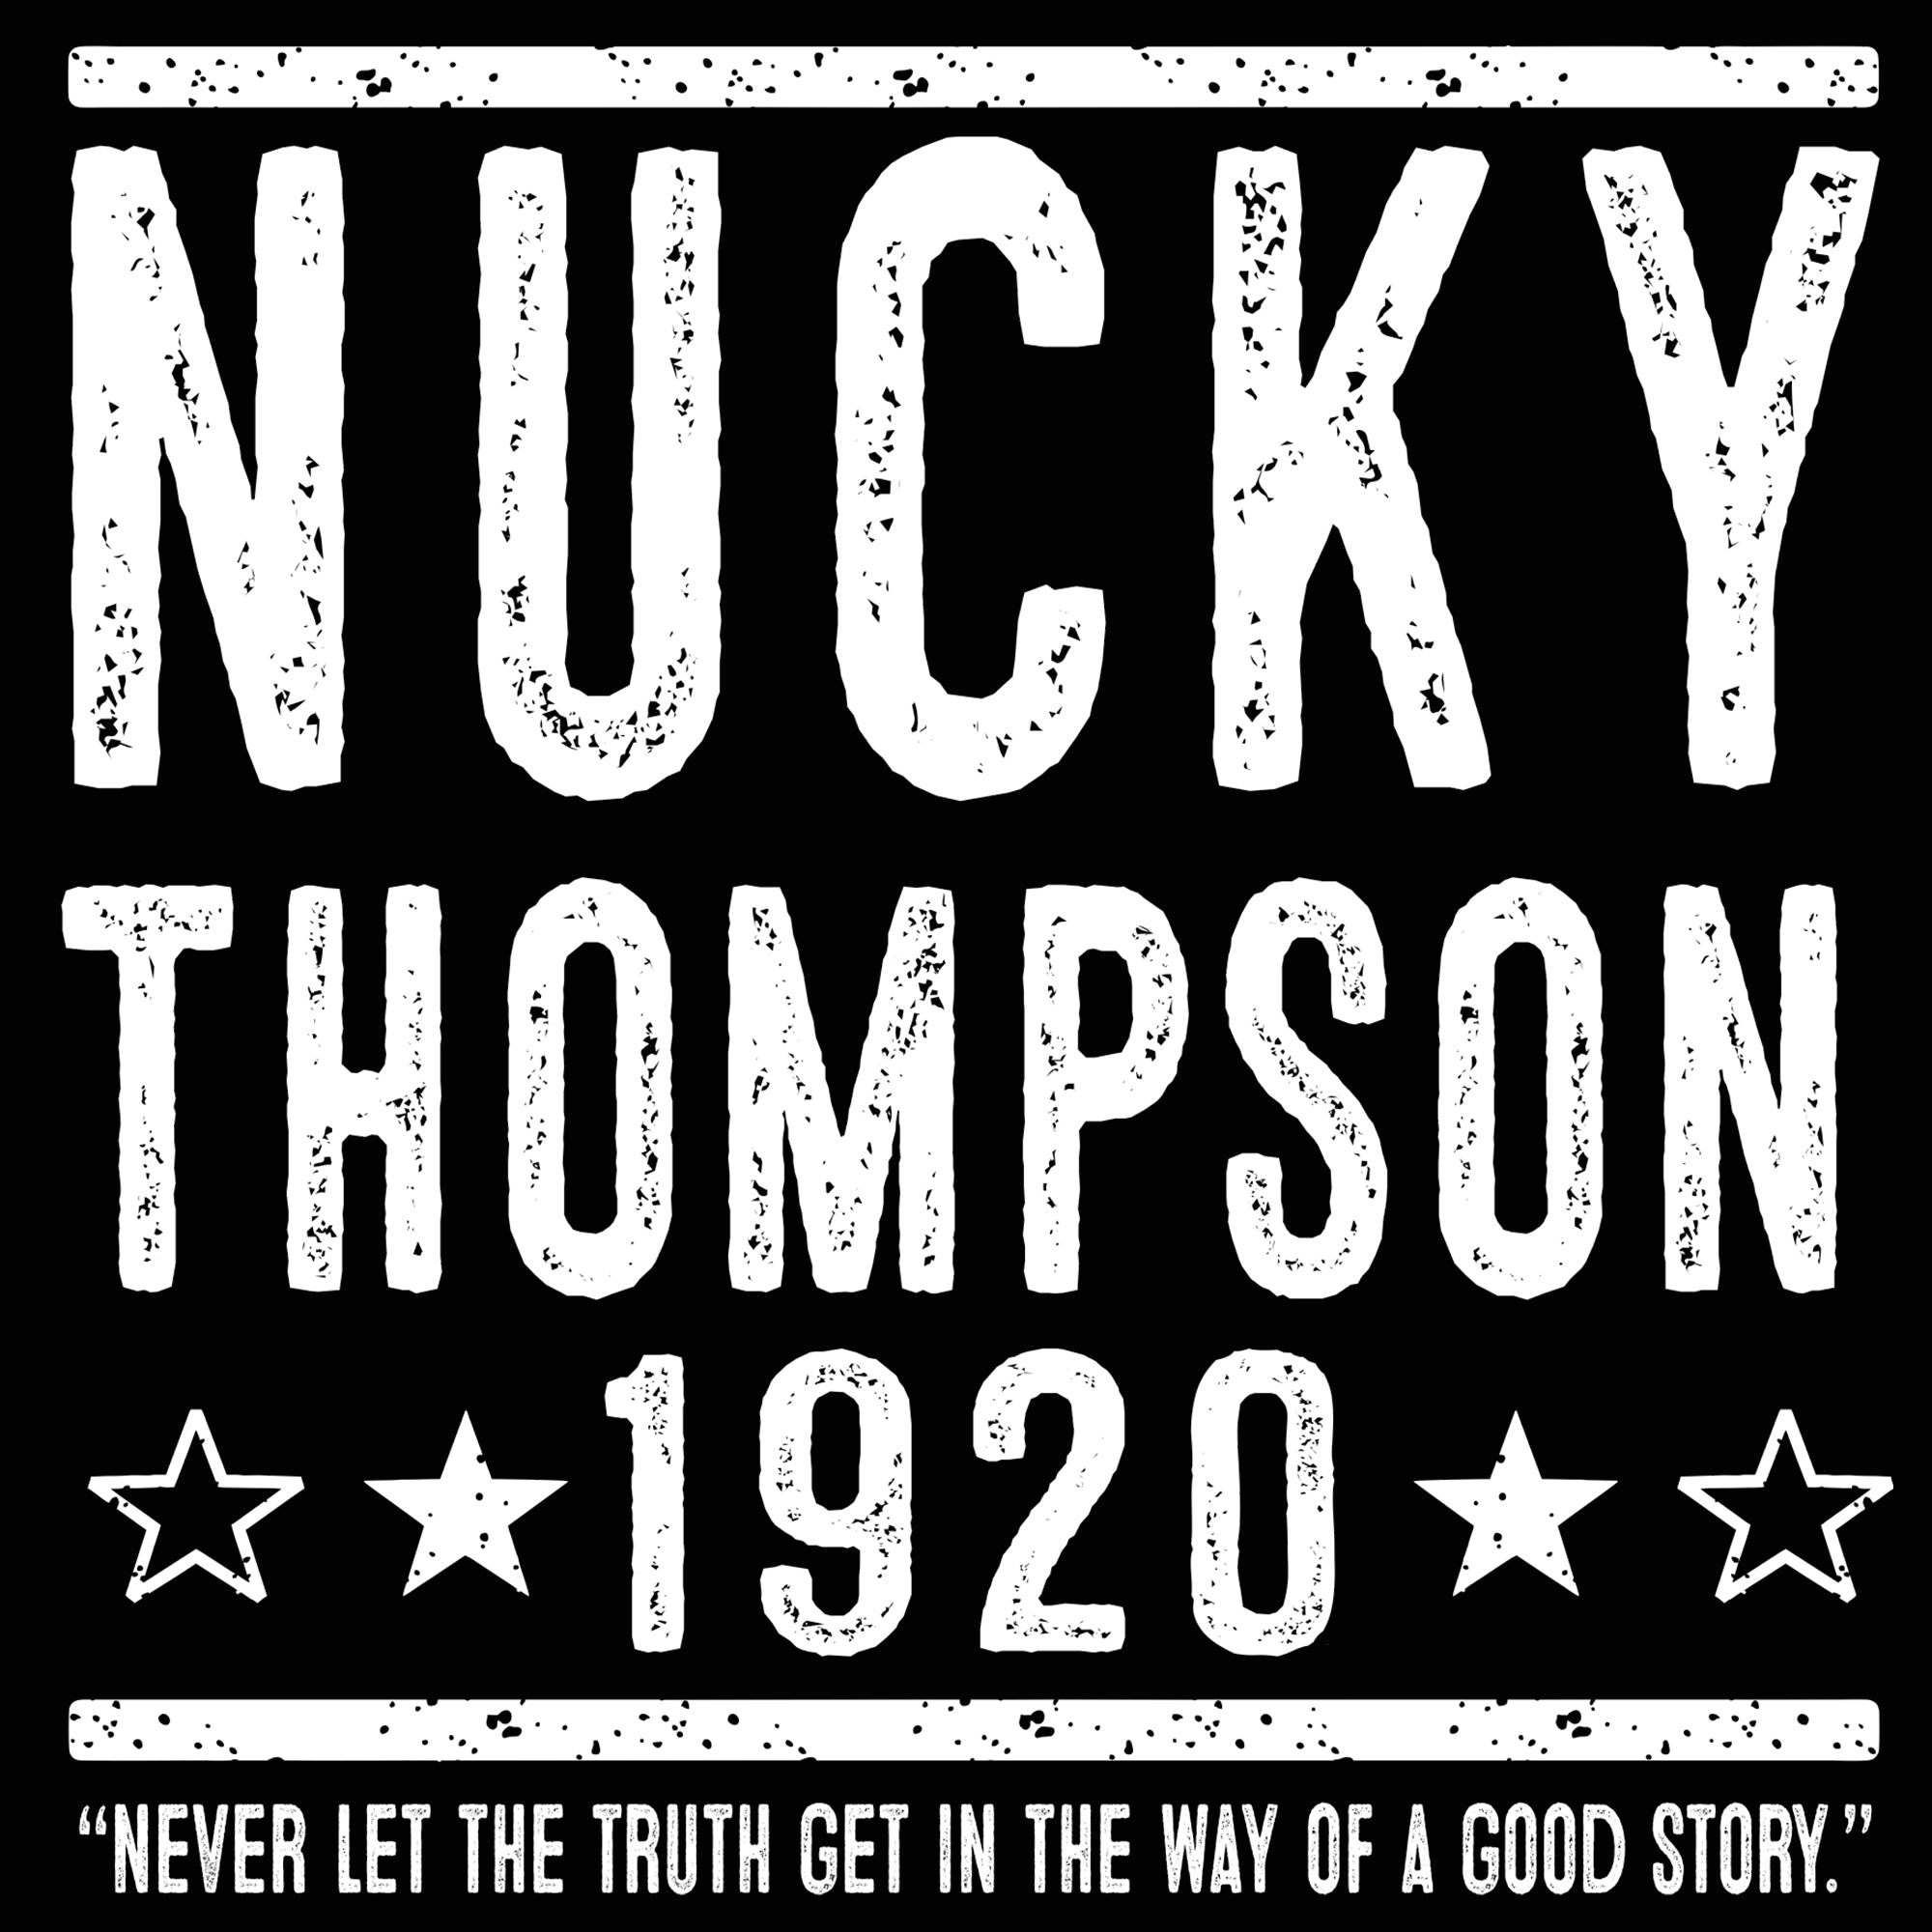 Nucky Thompson 1920 Election Tshirt - Donkey Tees